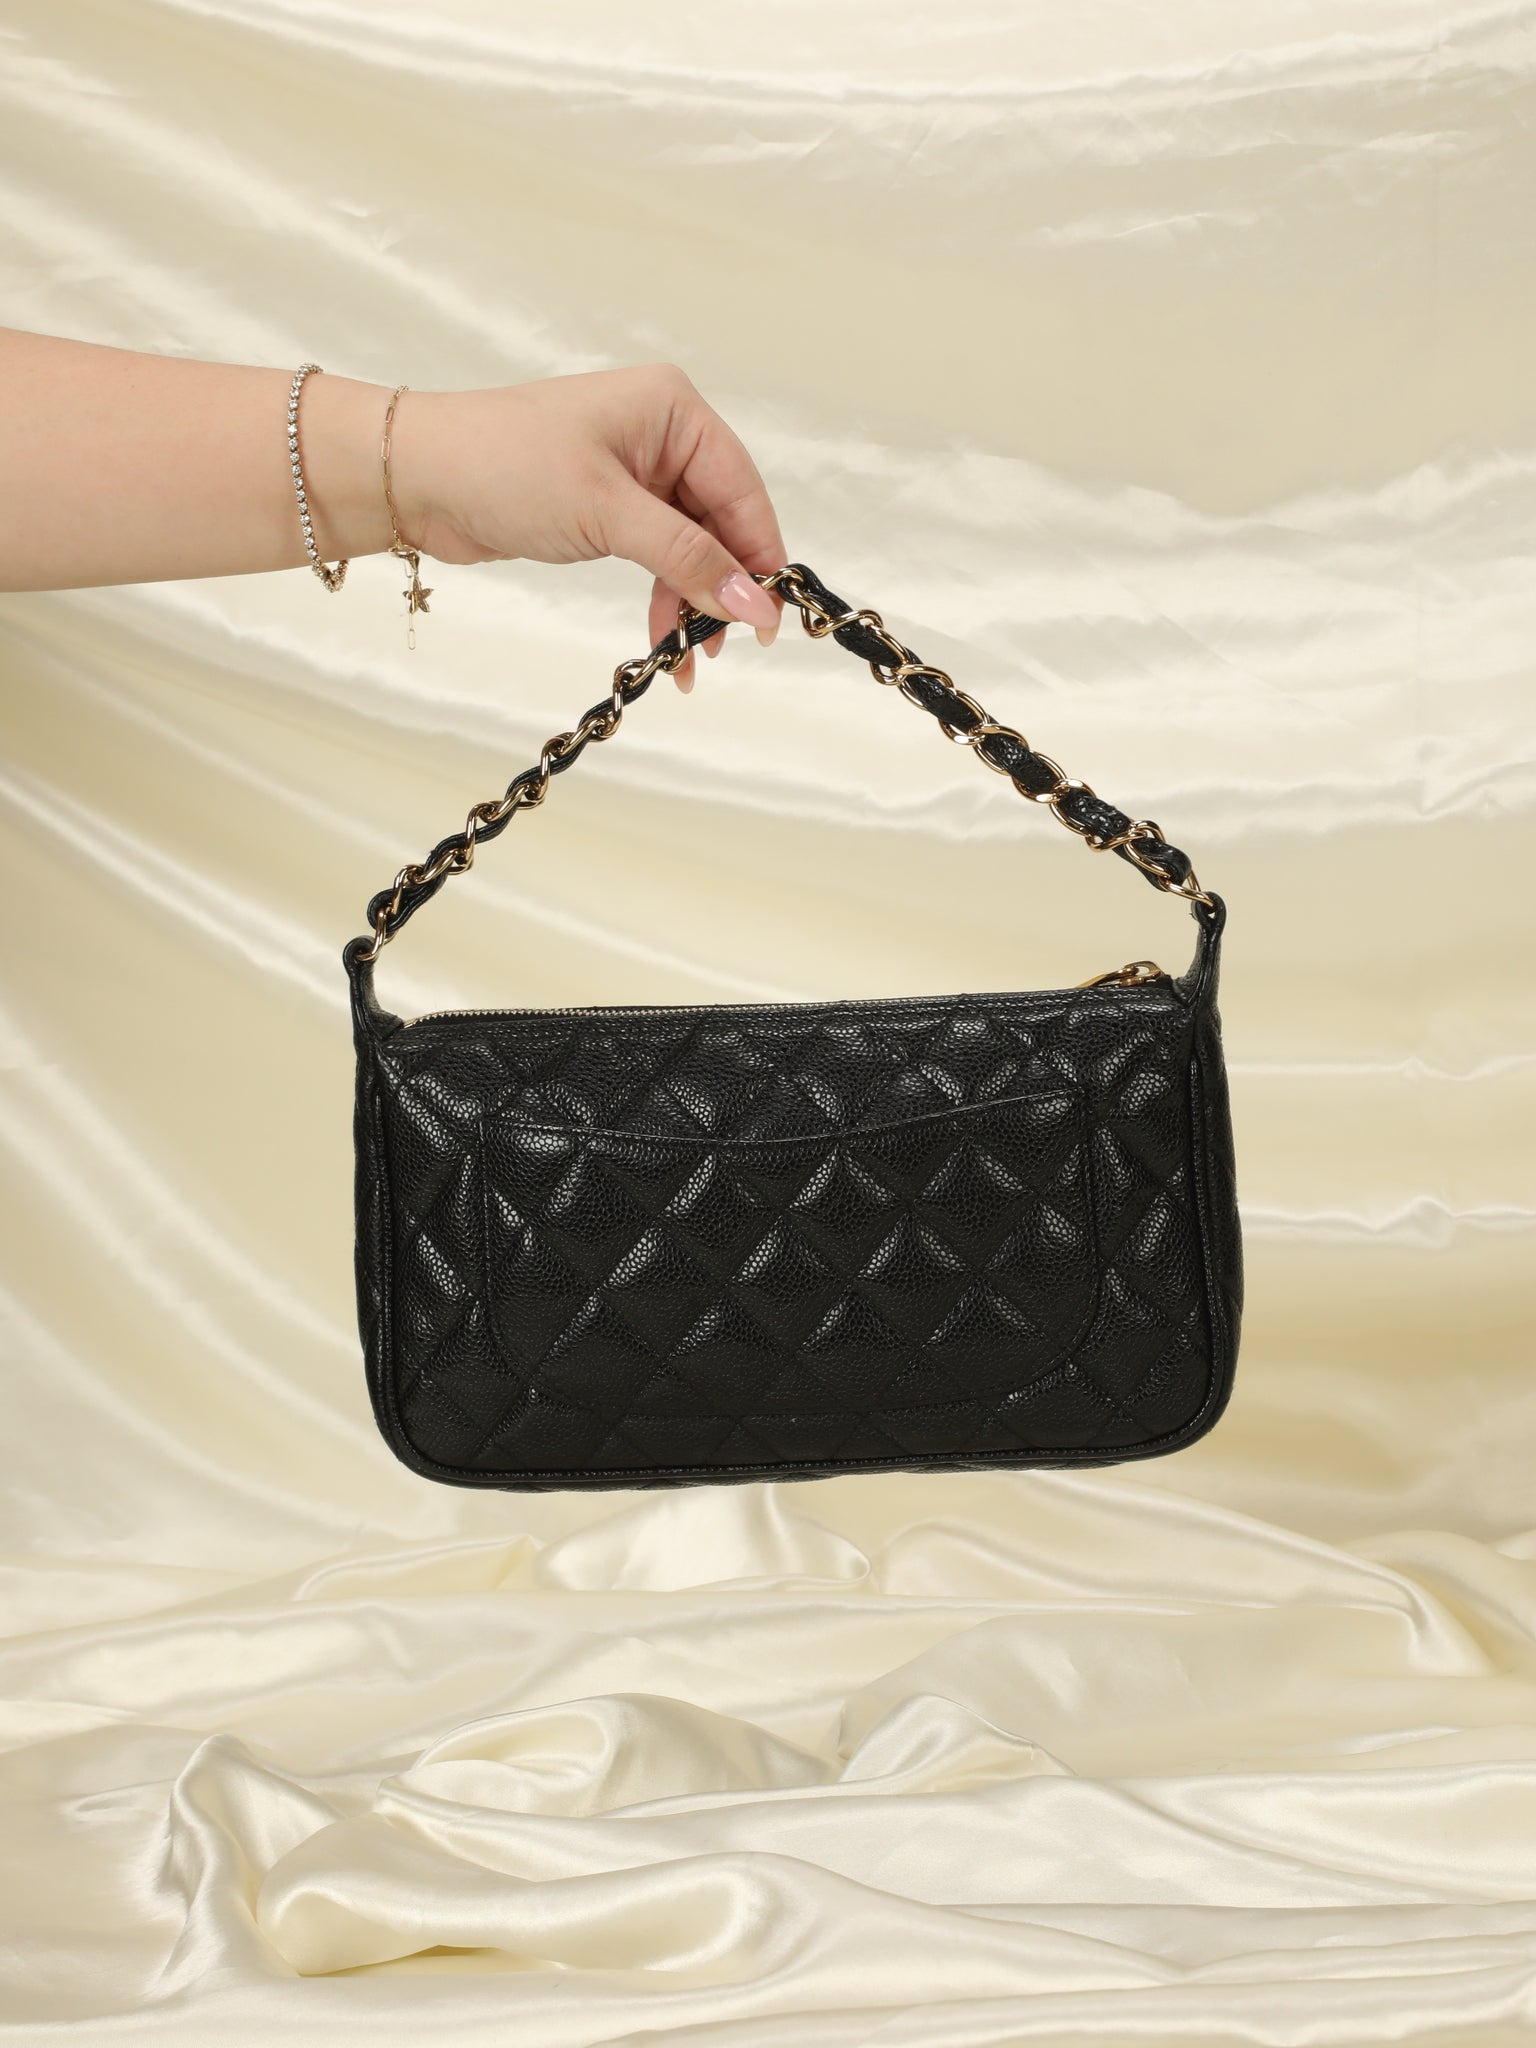 CHANEL CHANEL Caviar Small Bags & Handbags for Women